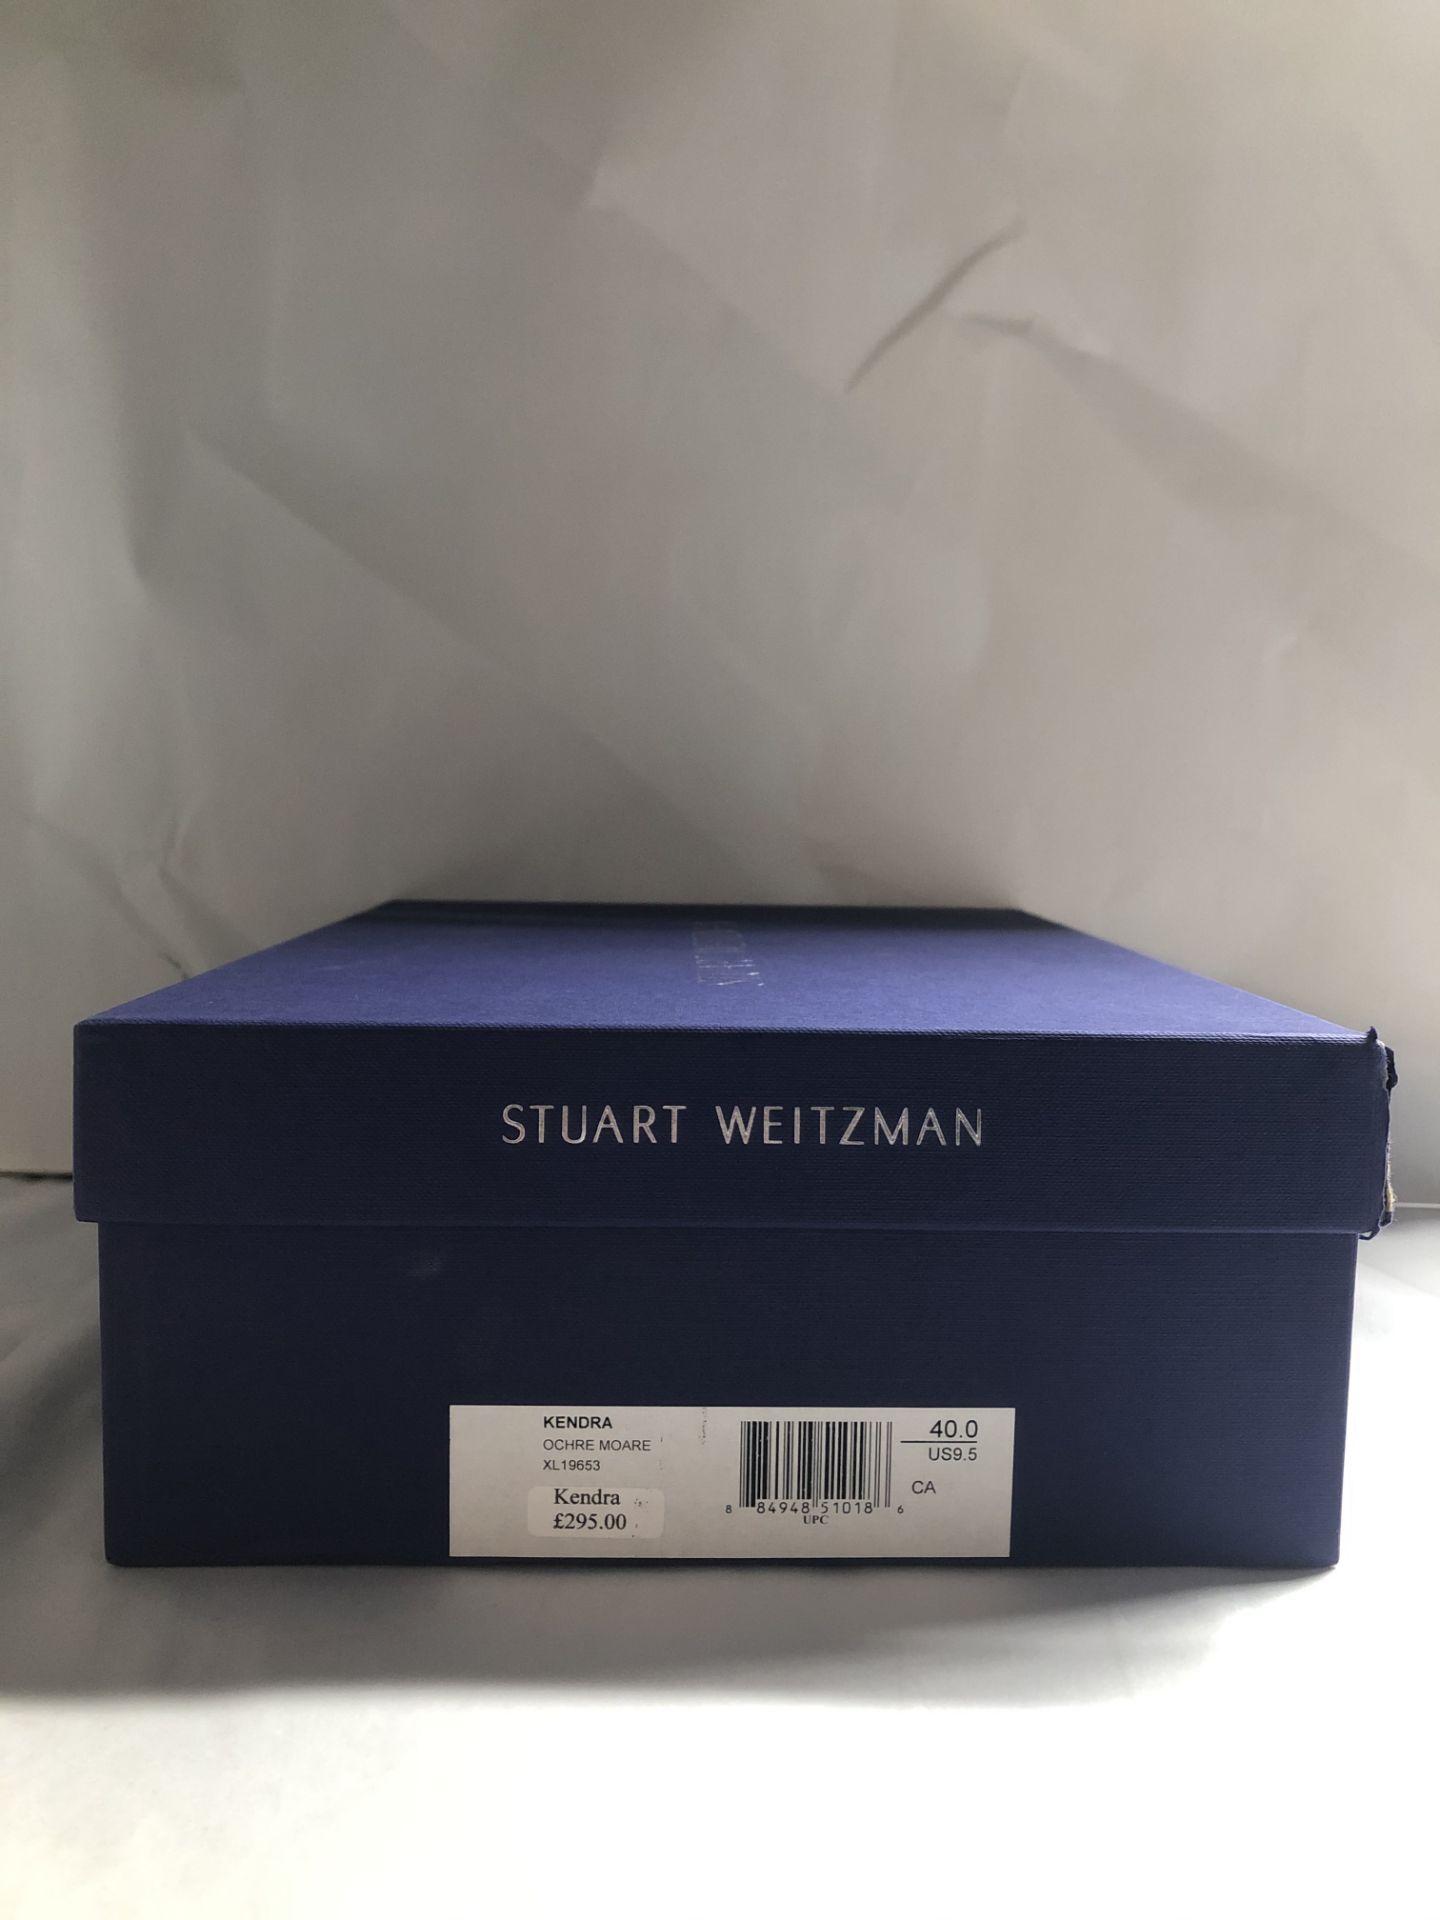 Stuart Weitzman Kendra Ochre Moare Heels. EU 40 RRP £295.00 - Image 2 of 2